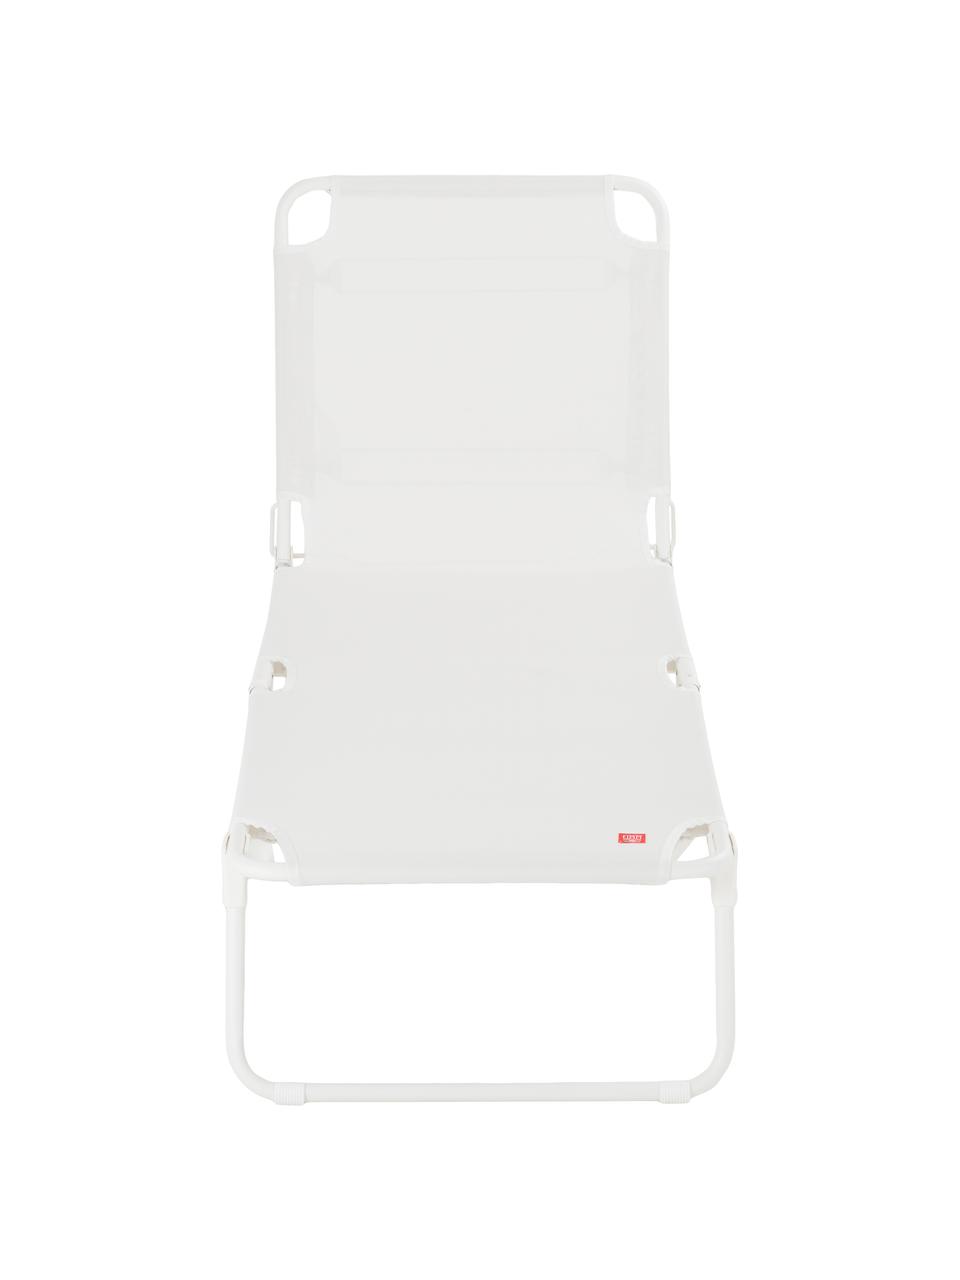 Ligstoel Fiam Amigo zonder armleuning, Frame: aluminium, Bekleding: polyester, Wit, L 190 x B 58 cm